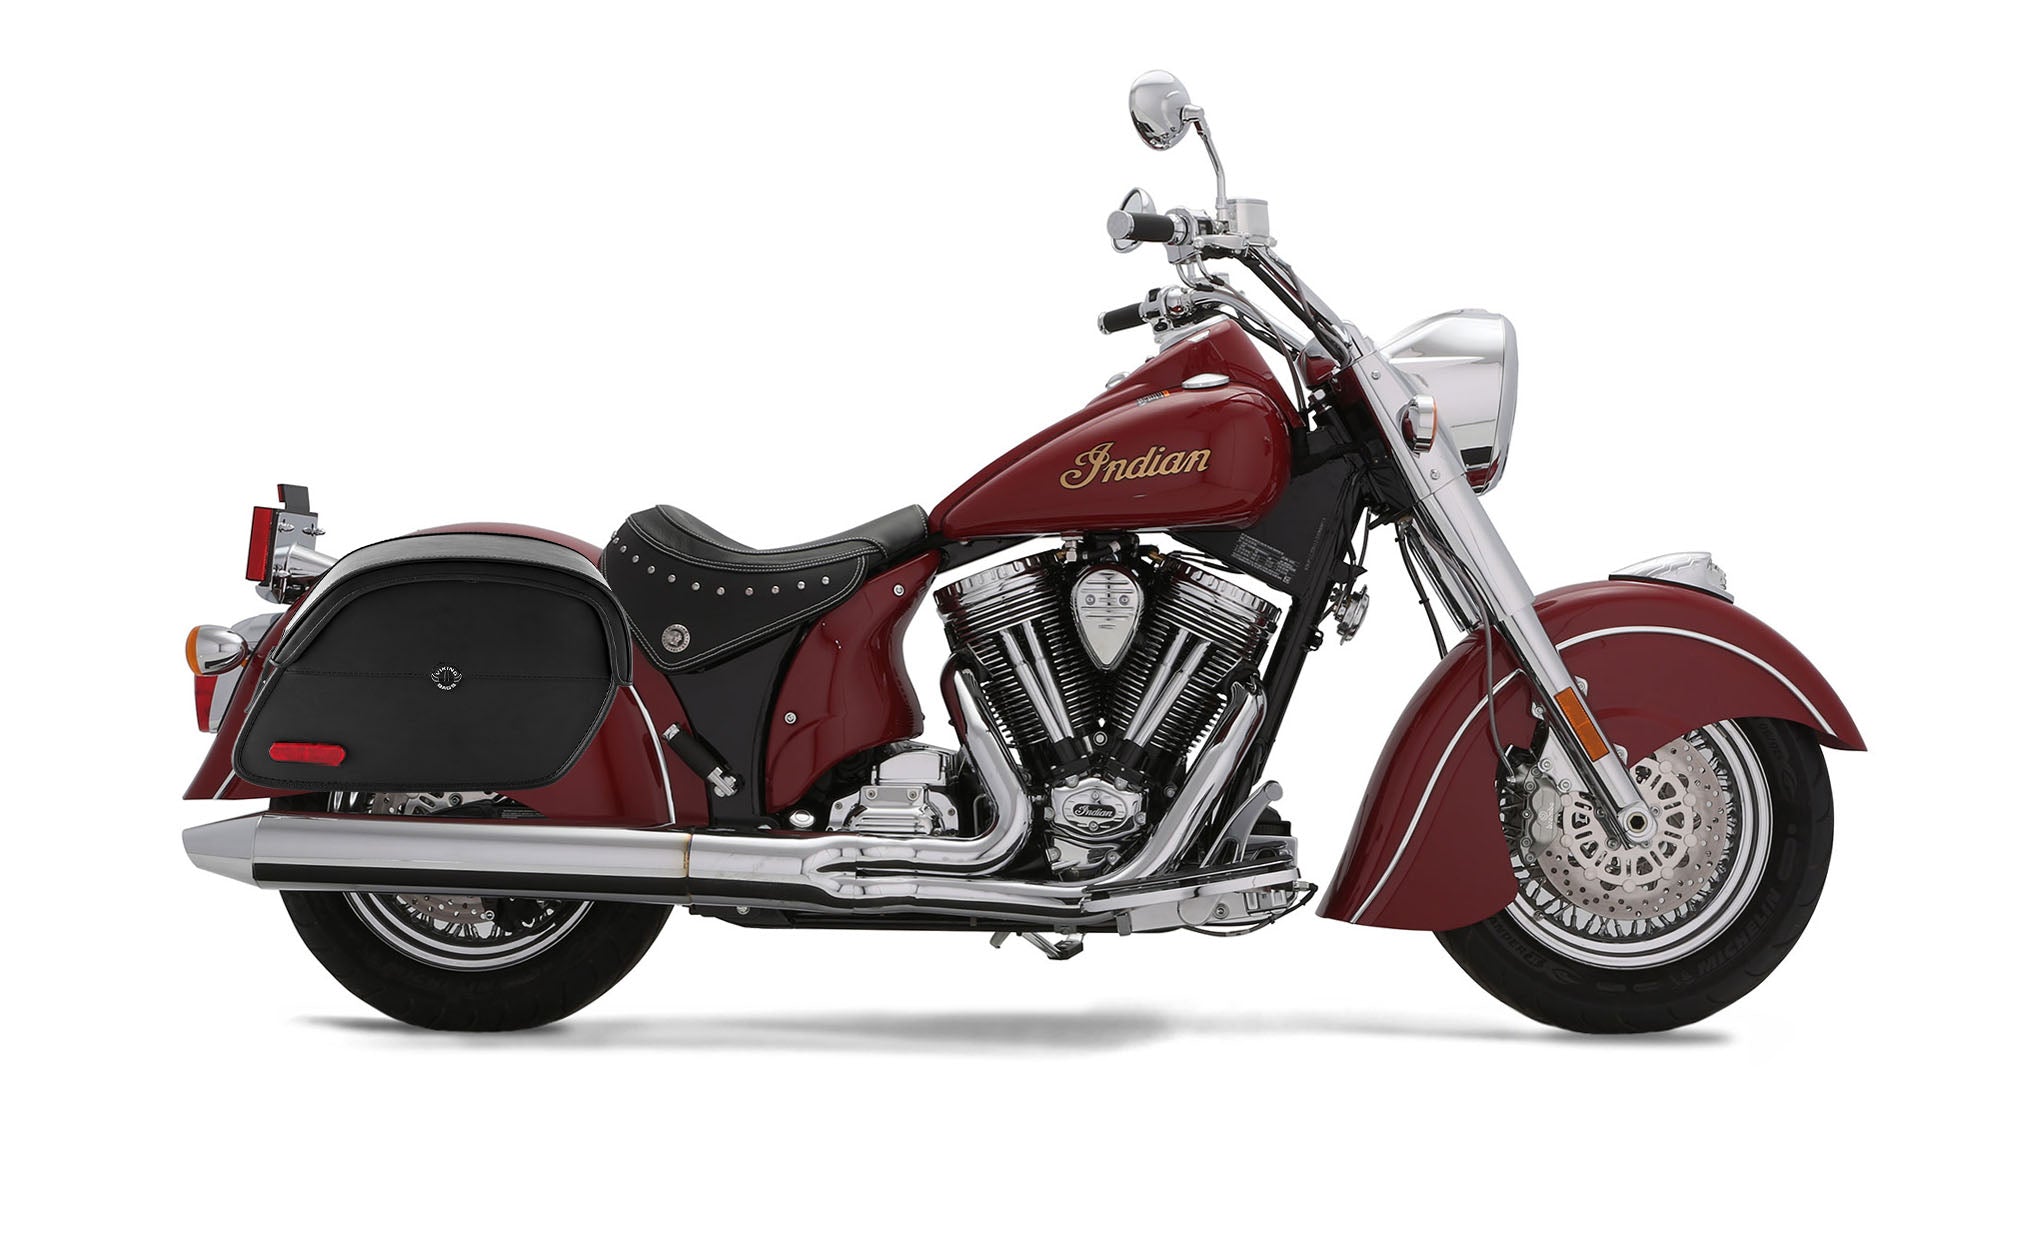 Viking California Large Indian Chief Deluxe Leather Motorcycle Saddlebags on Bike Photo @expand